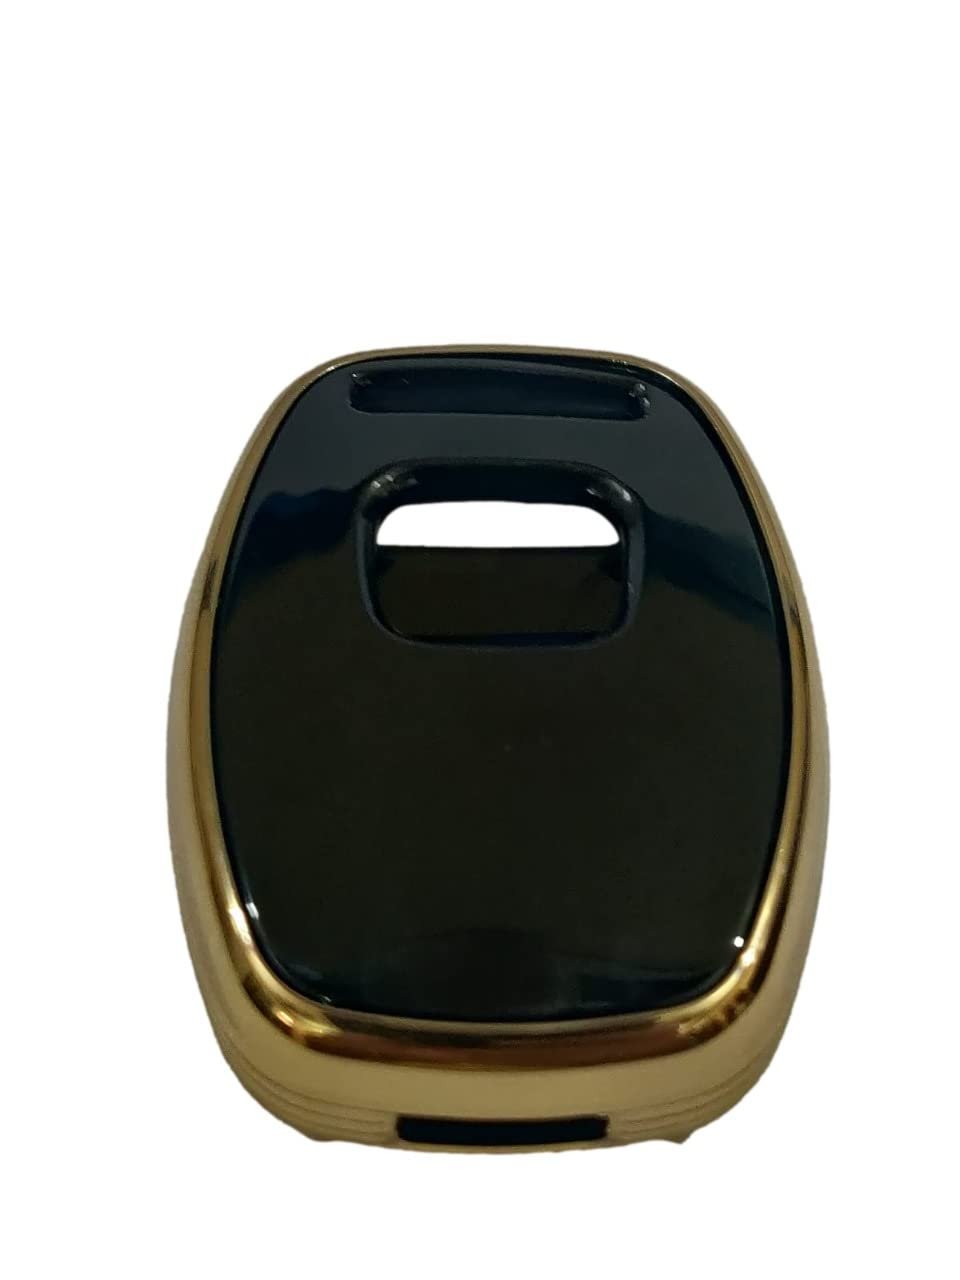 TPU silicone key cover for Compatible with City, CIvic, Jazz, Brio, Amaze 2 button remote key (Black)